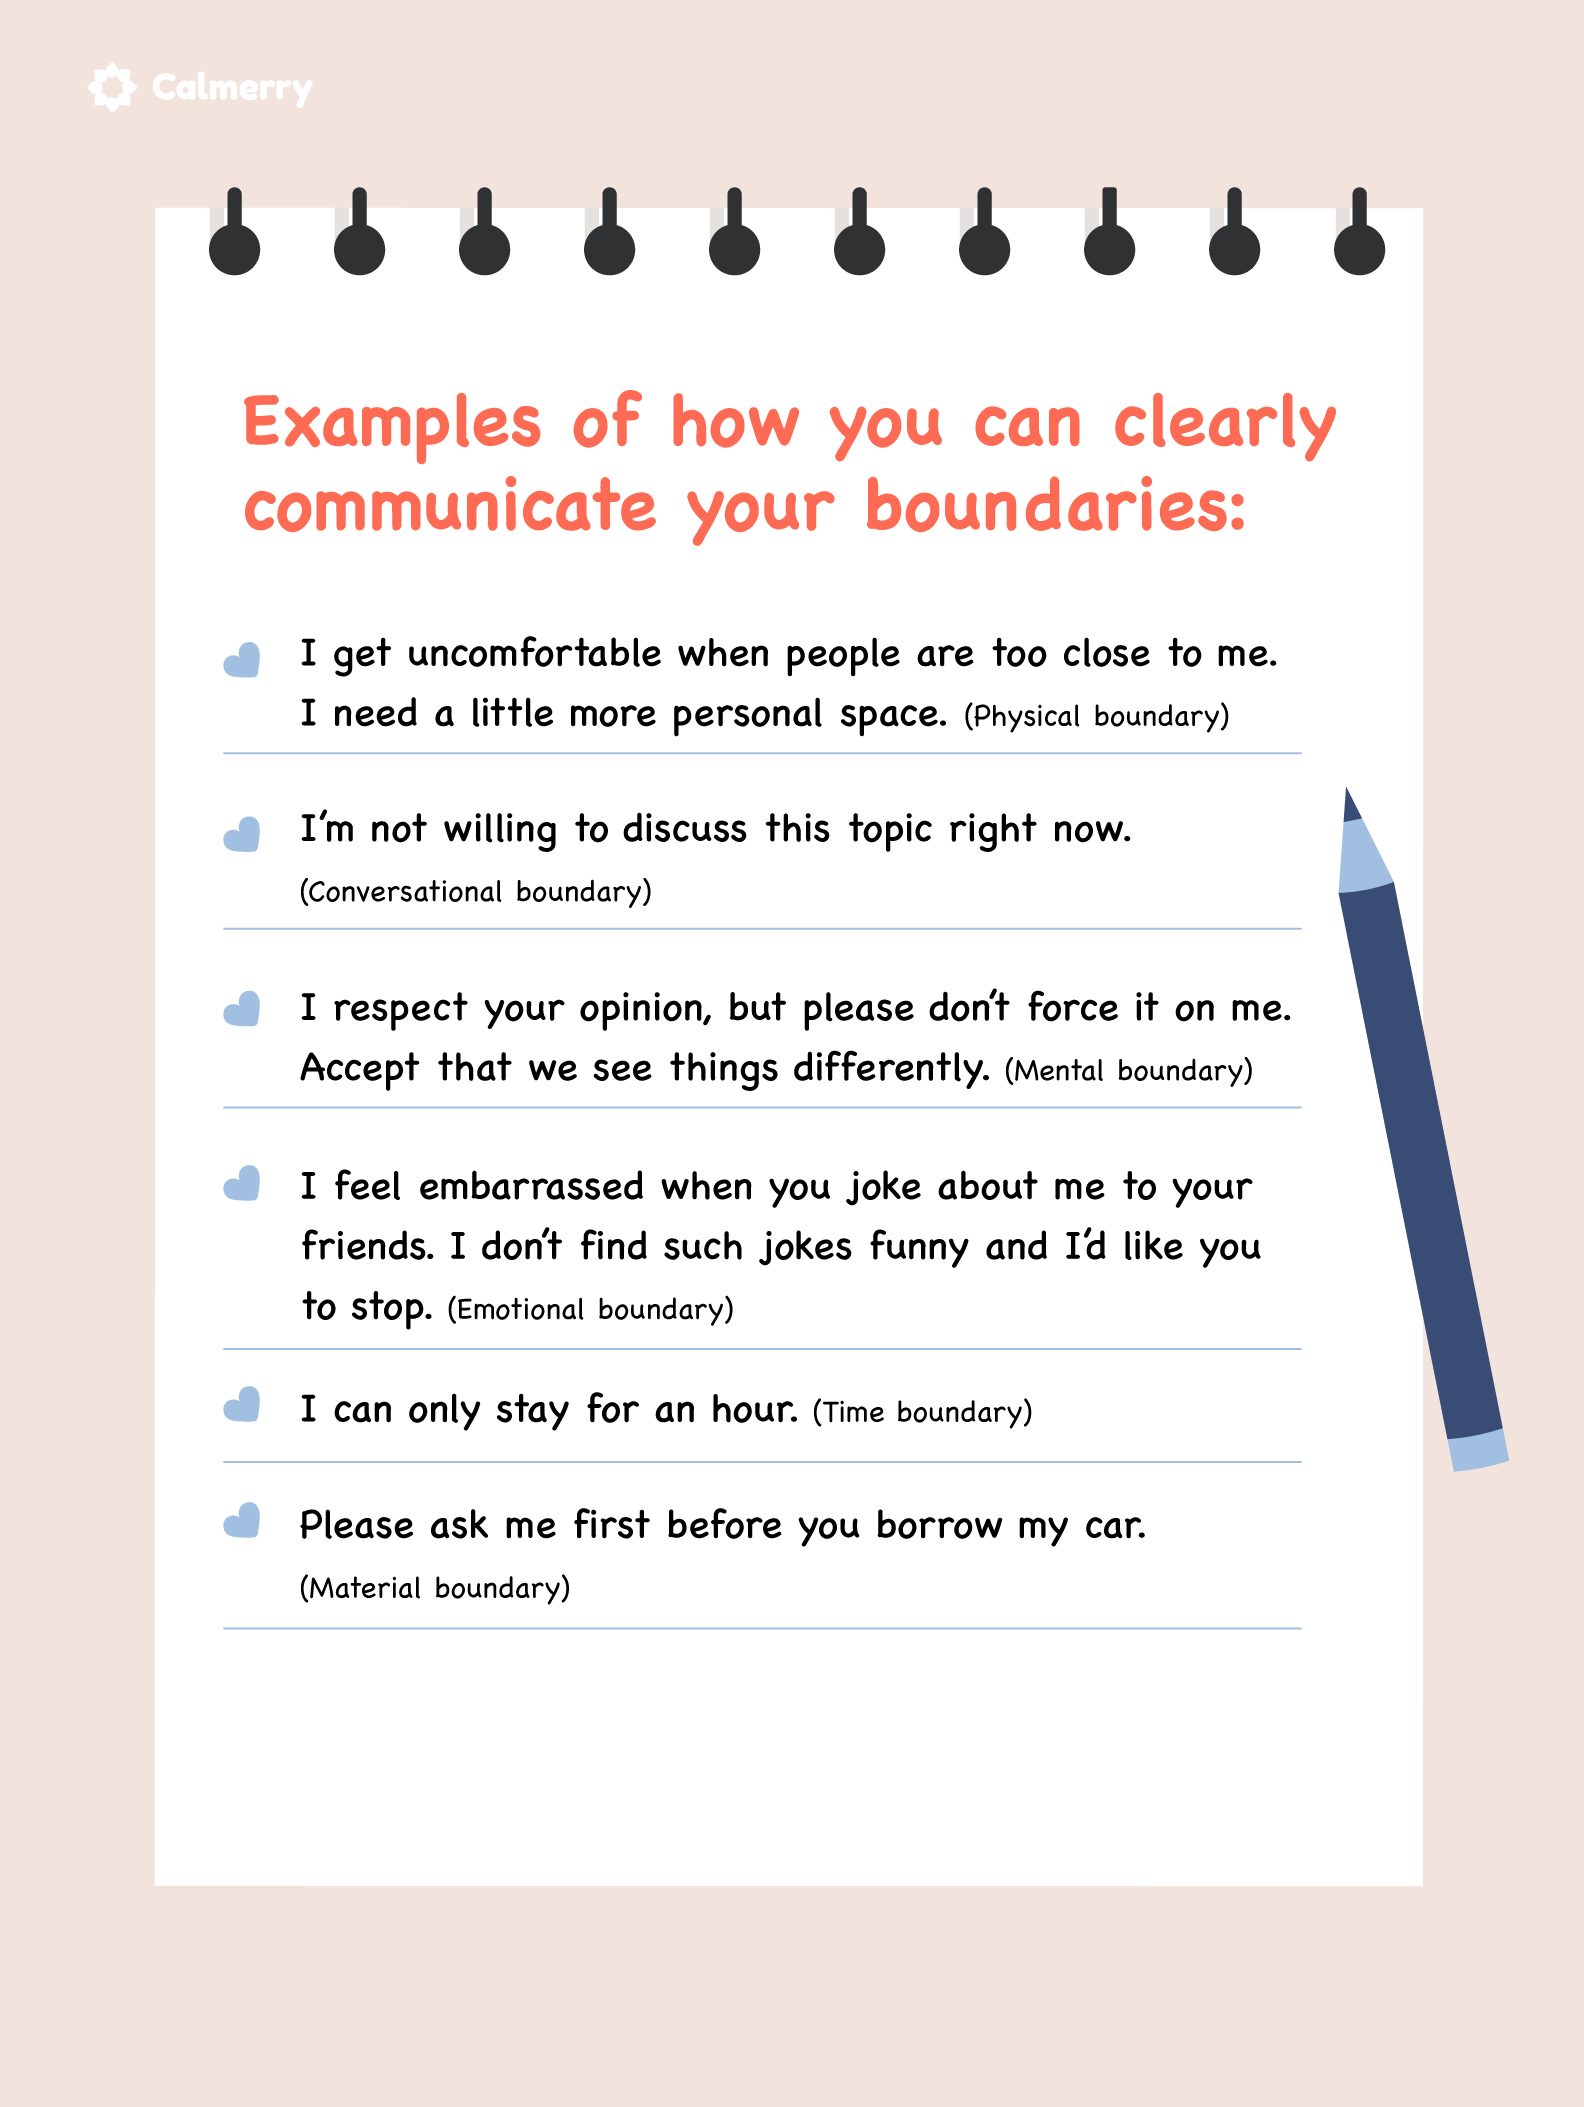 how to set boundaries